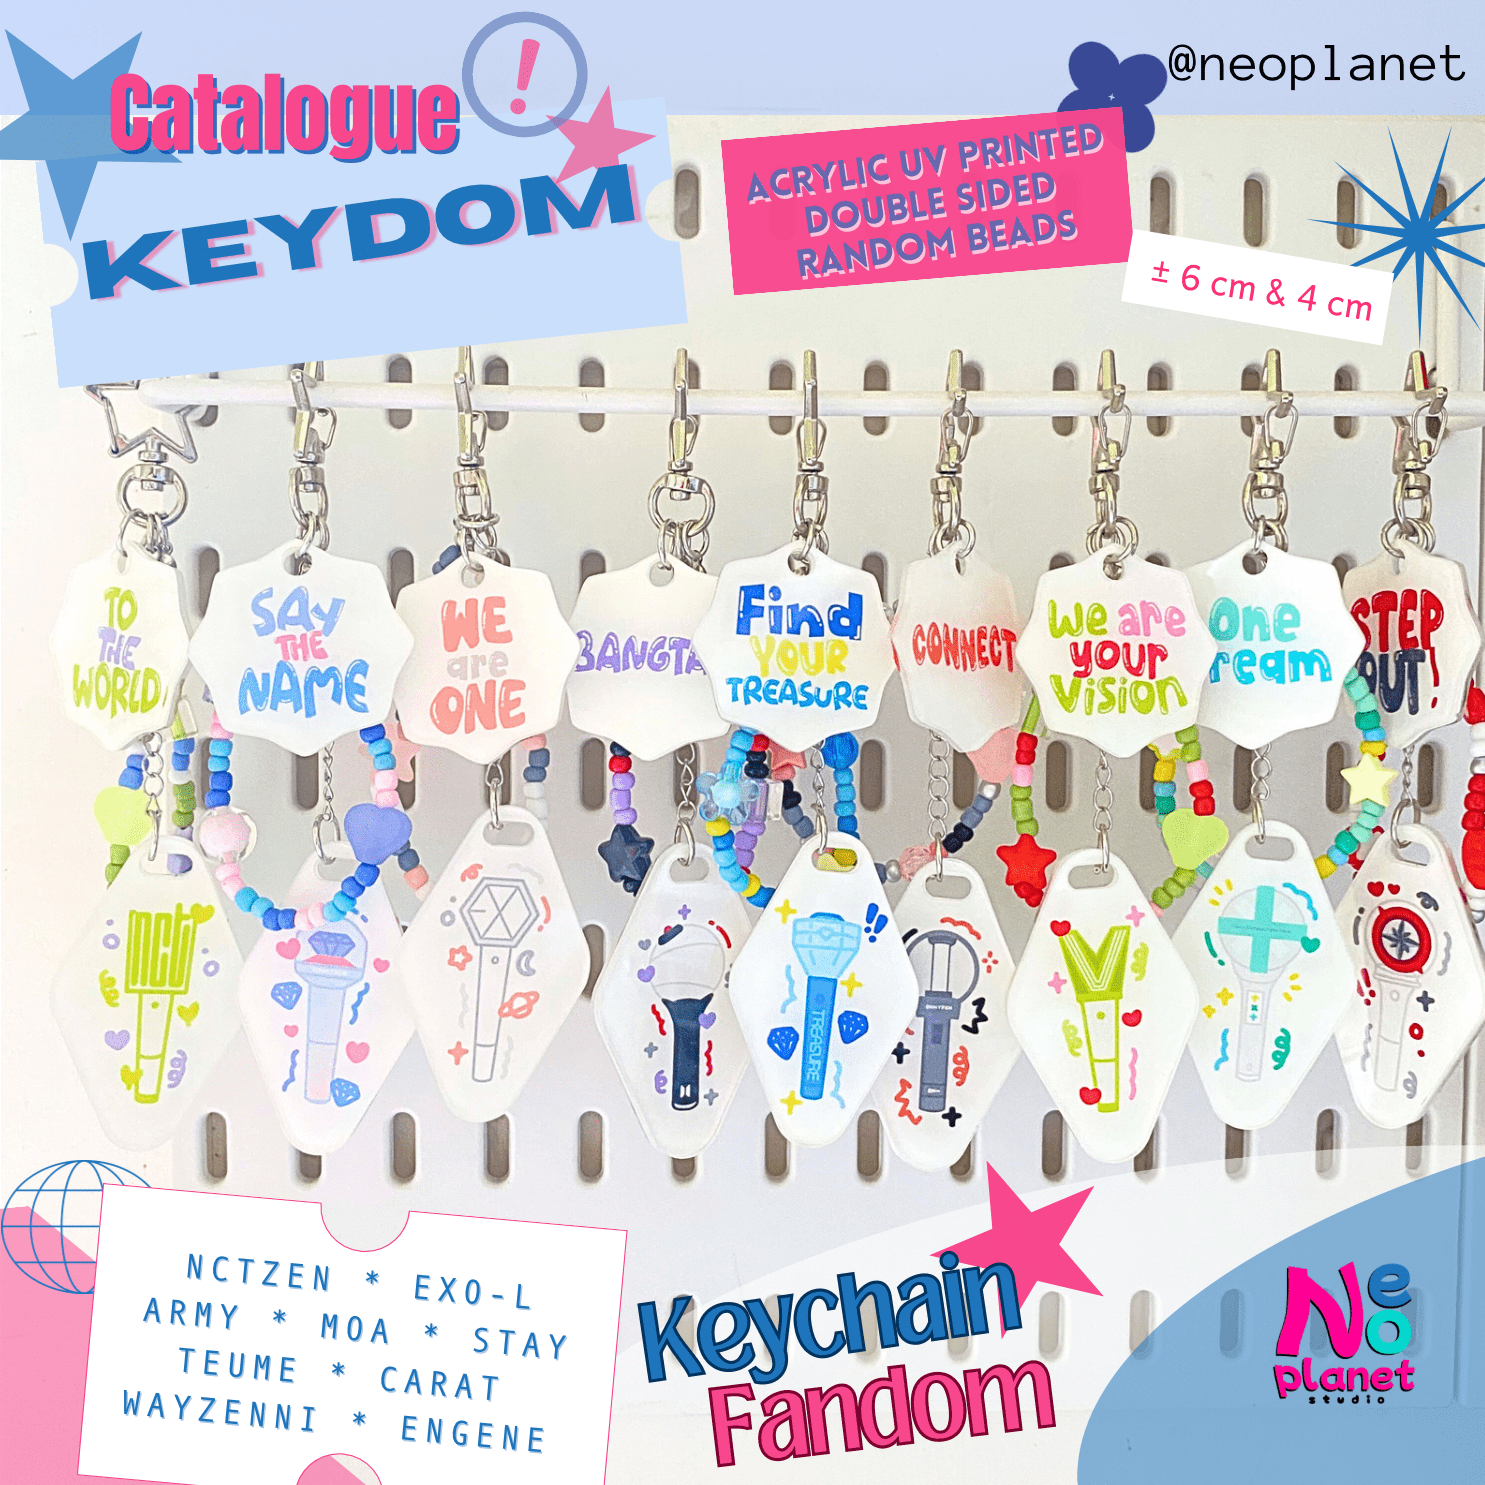 KEYDOM Keychain Fandom